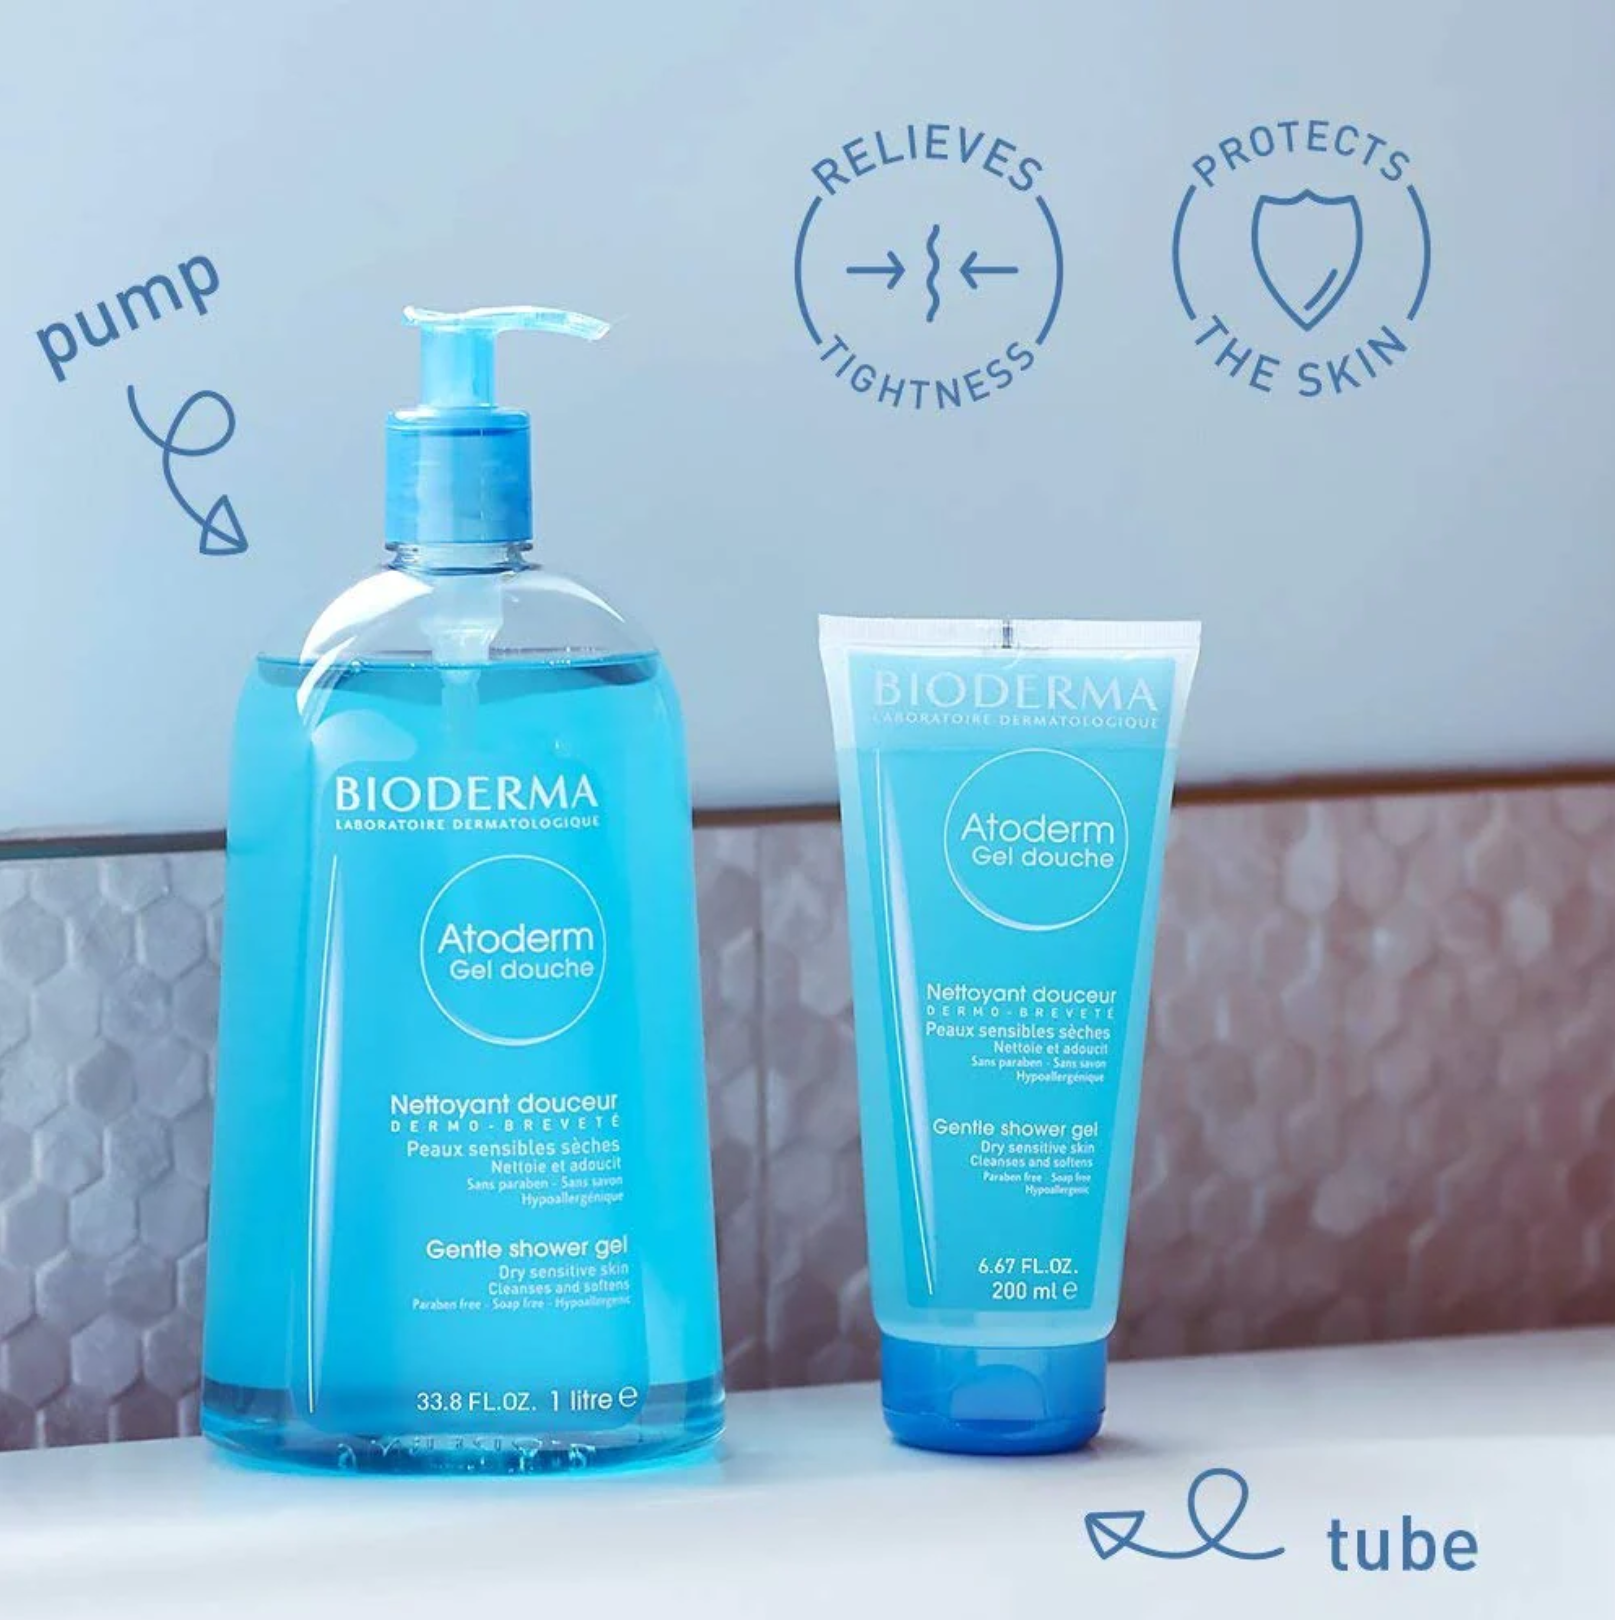 Bioderma Atoderm Shower Gel 乾燥護理系列 保濕滋潤潔膚啫喱 一般至乾燥皮膚 展示圖